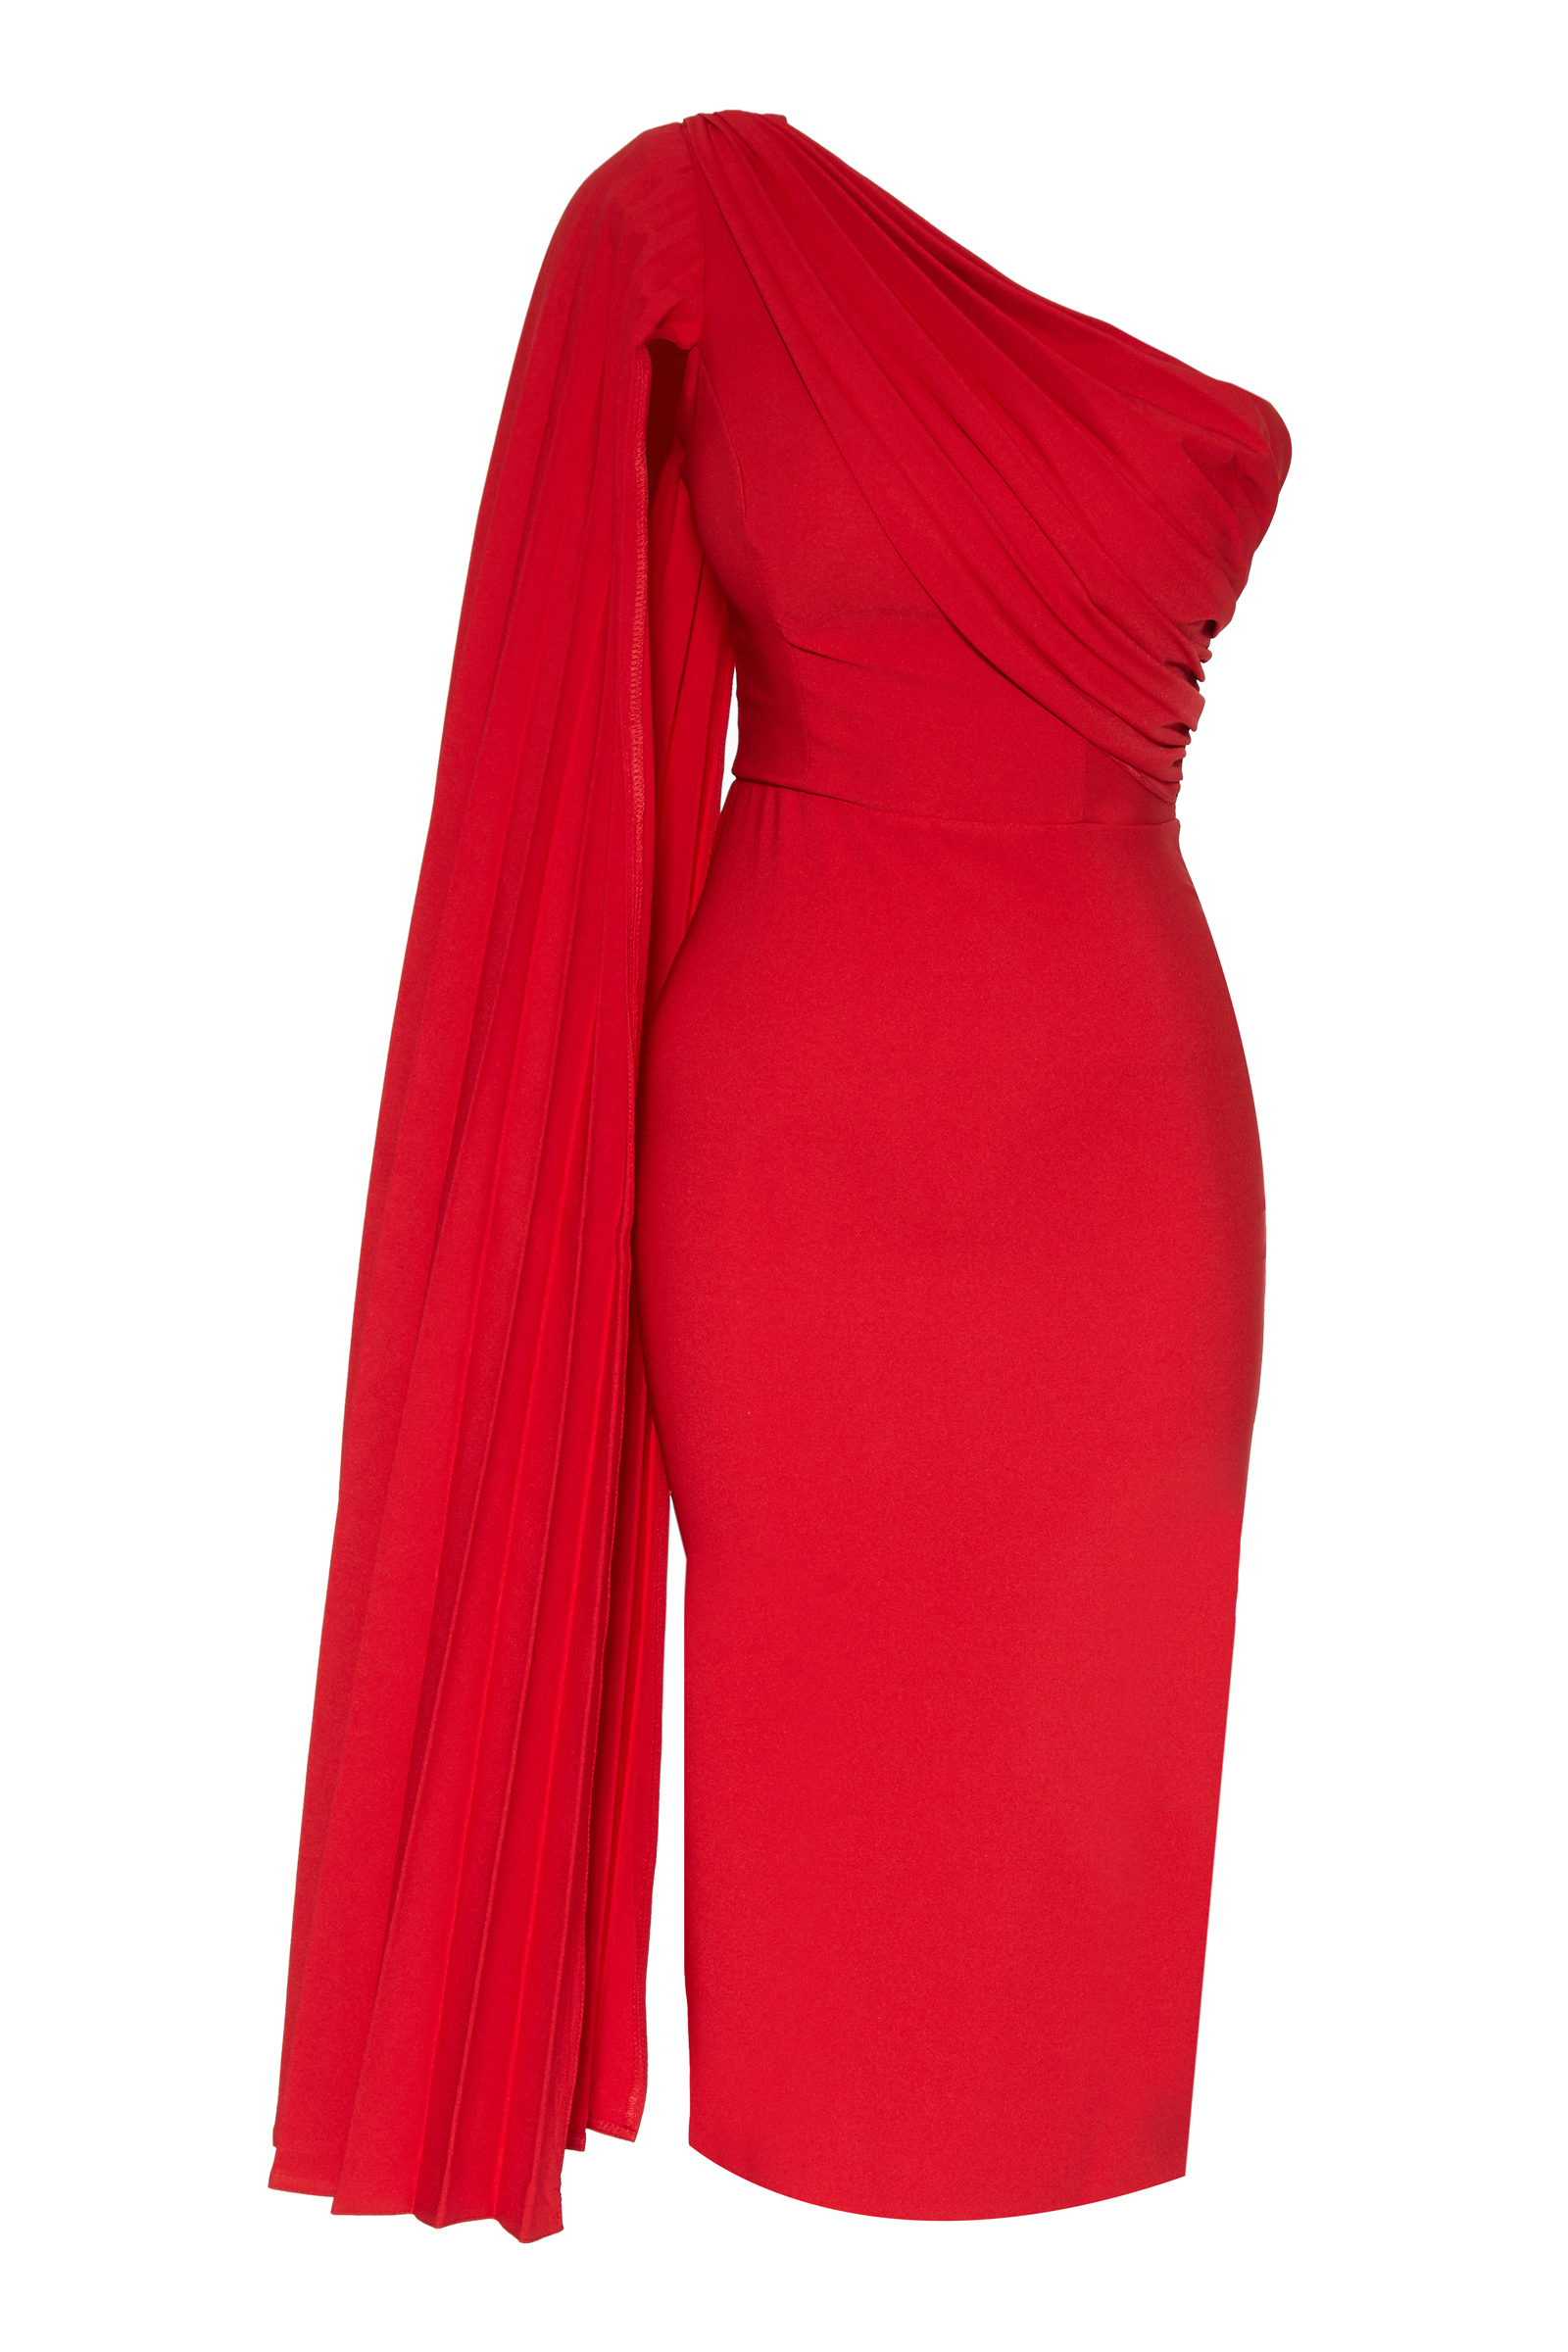 Red crepe one arm mini dress